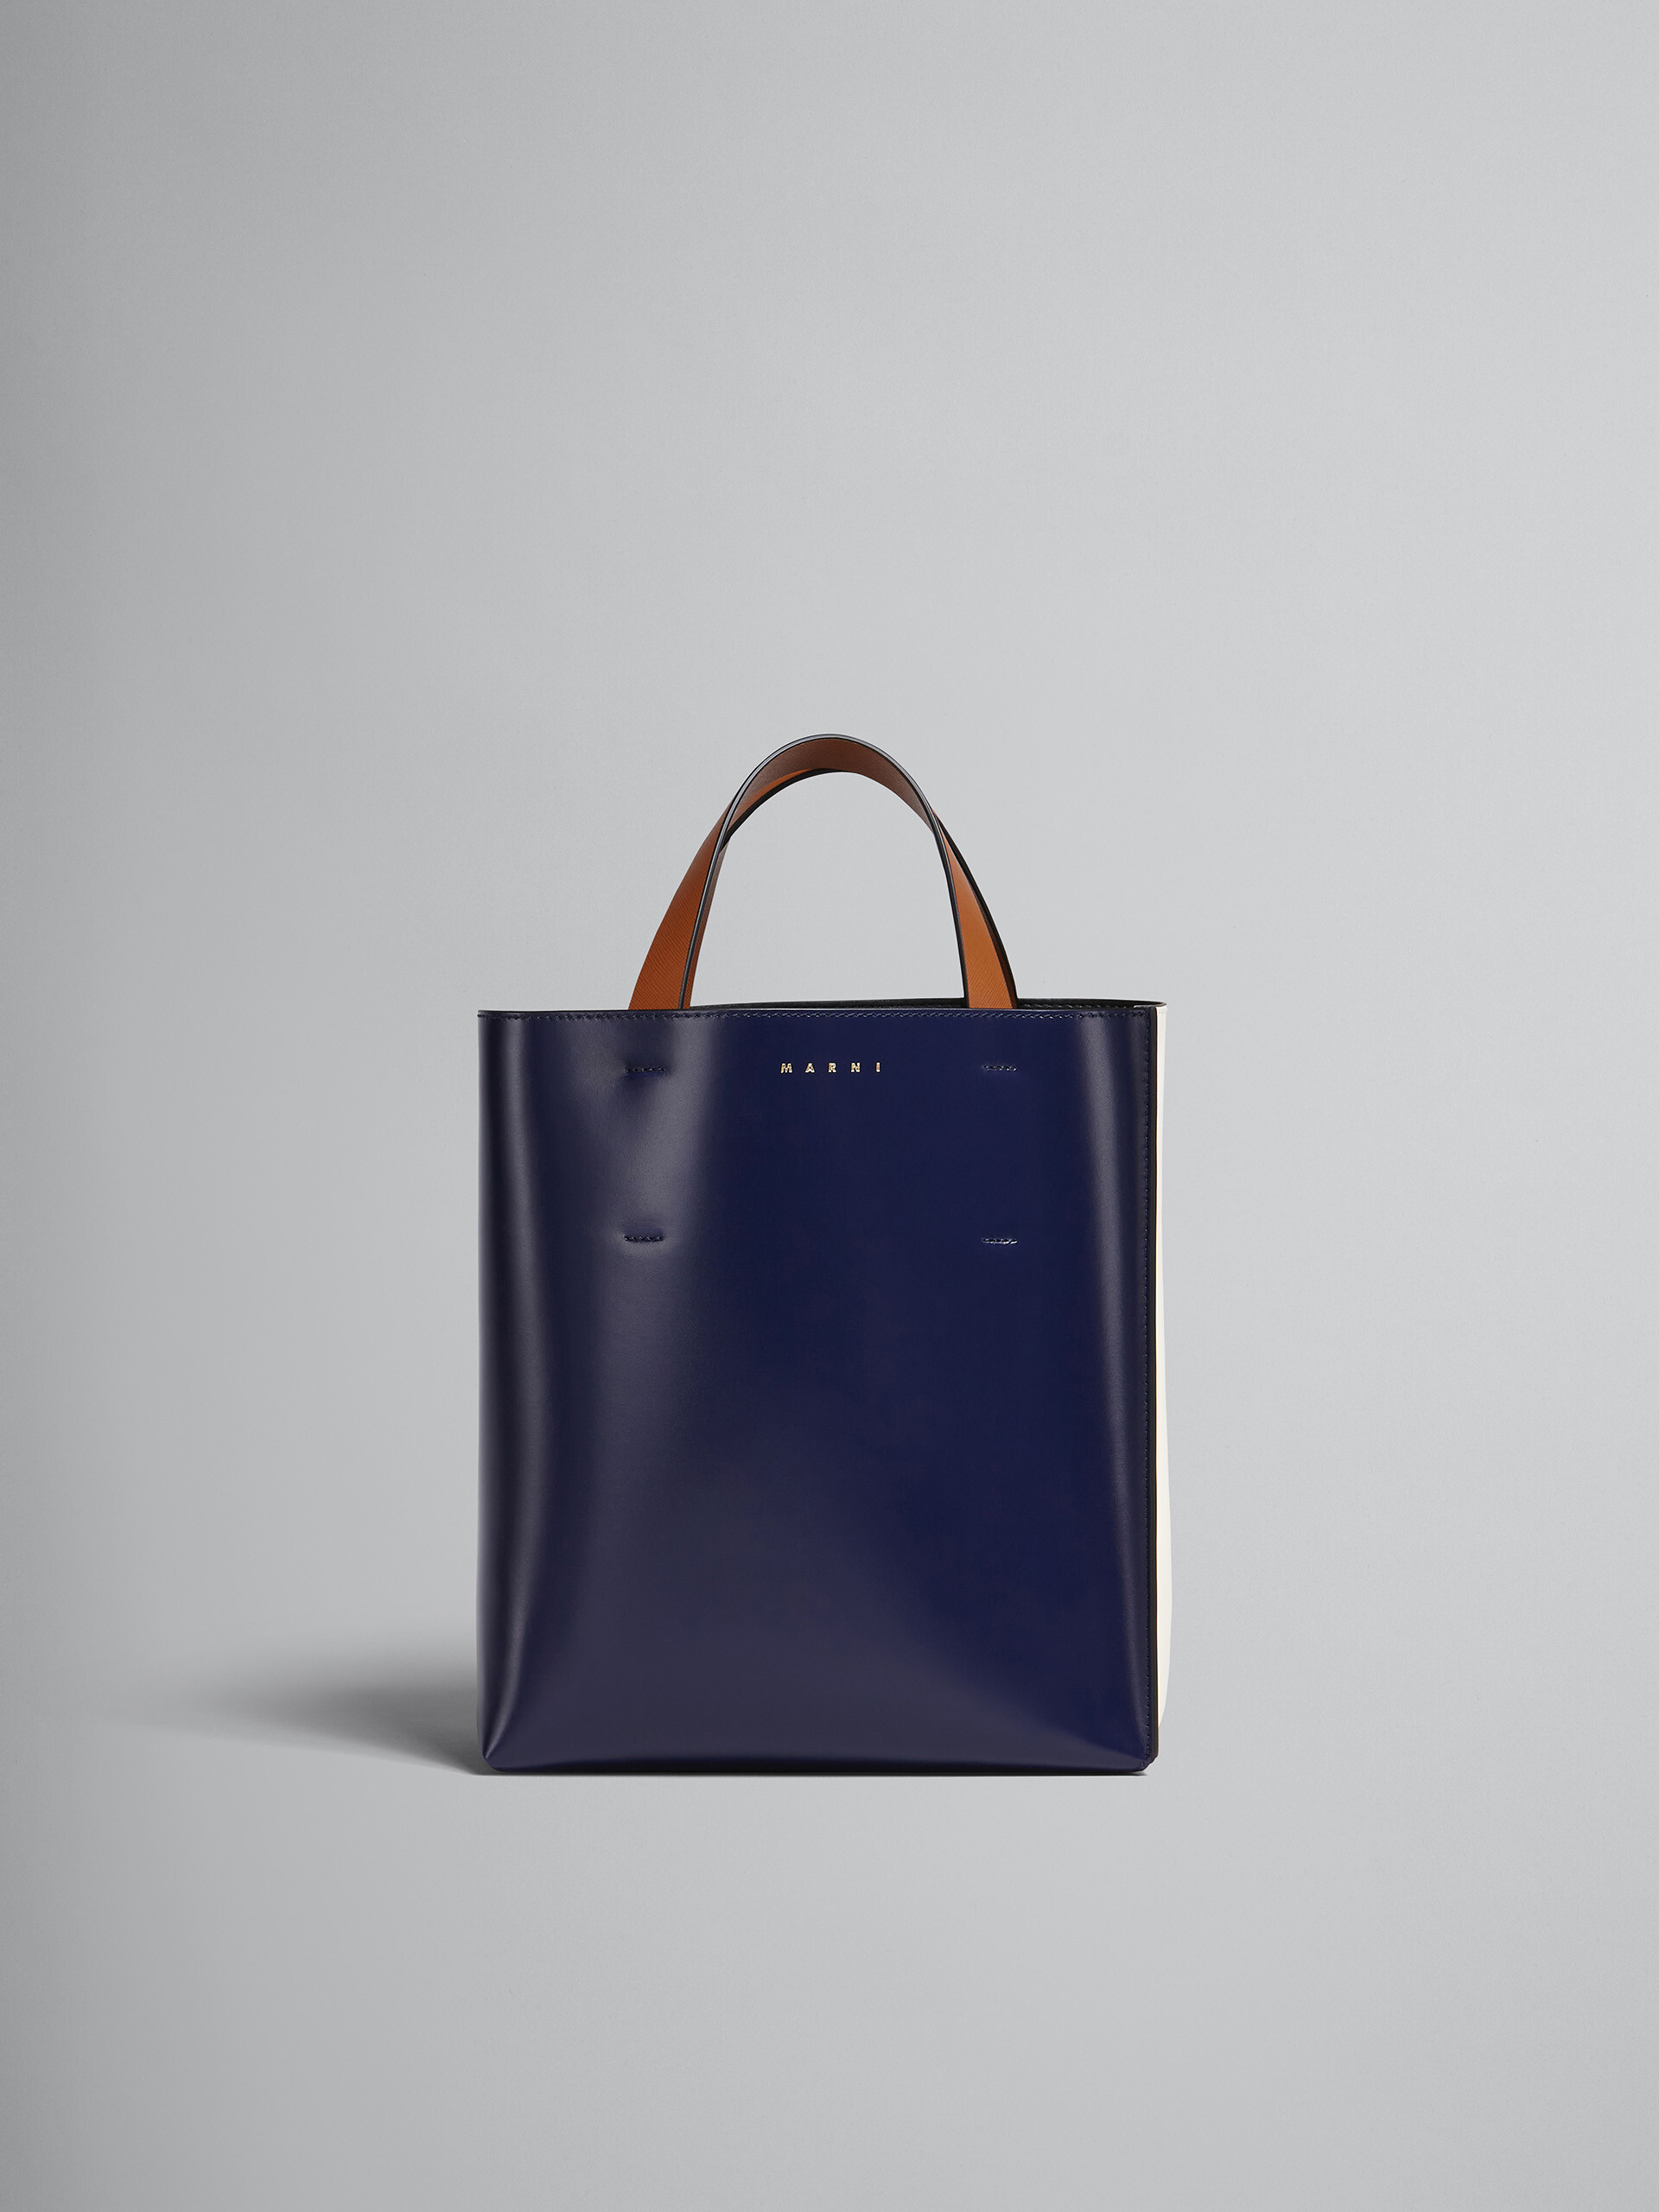 Petit sac MUSEO en cuir bleu et blanc - Sacs cabas - Image 1